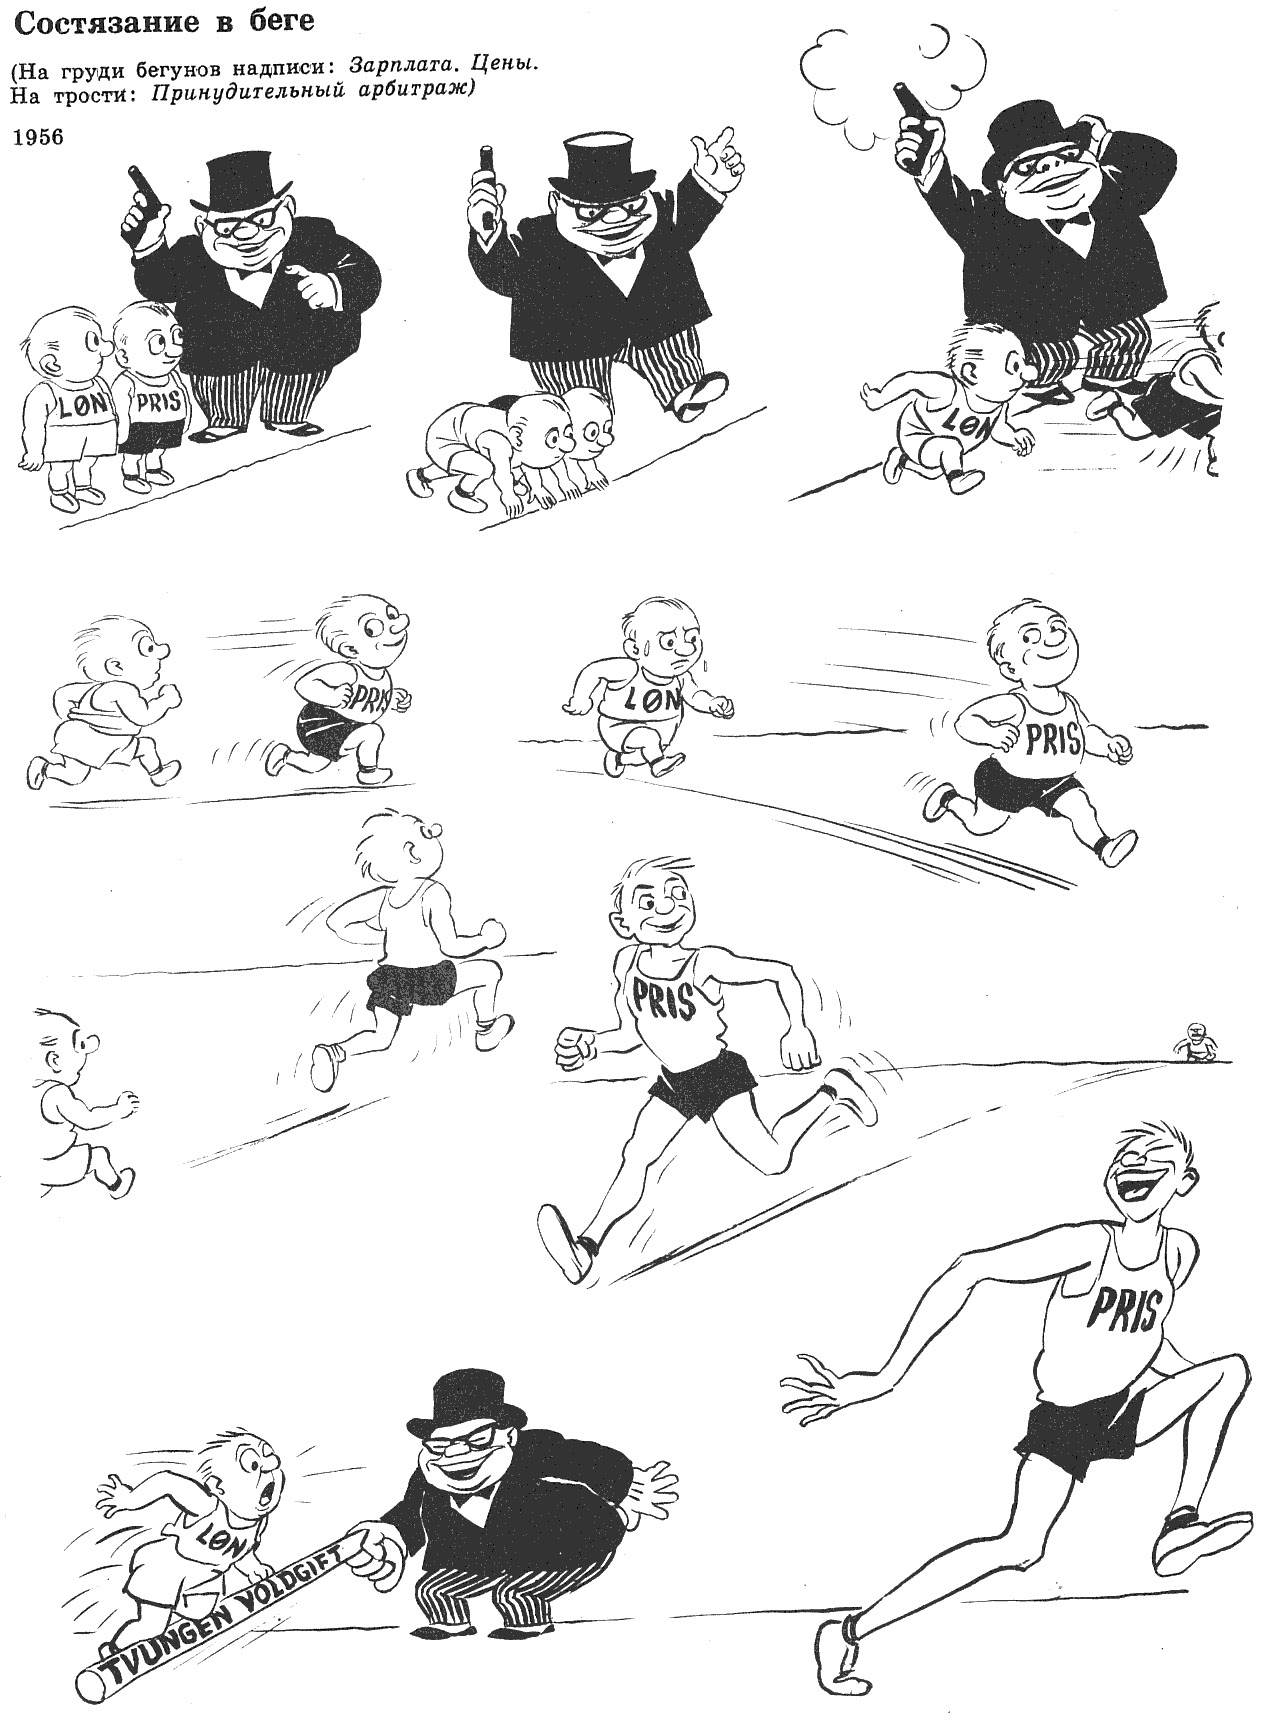 Херлуф Бидструп - датский карикатурист середины прошлого века